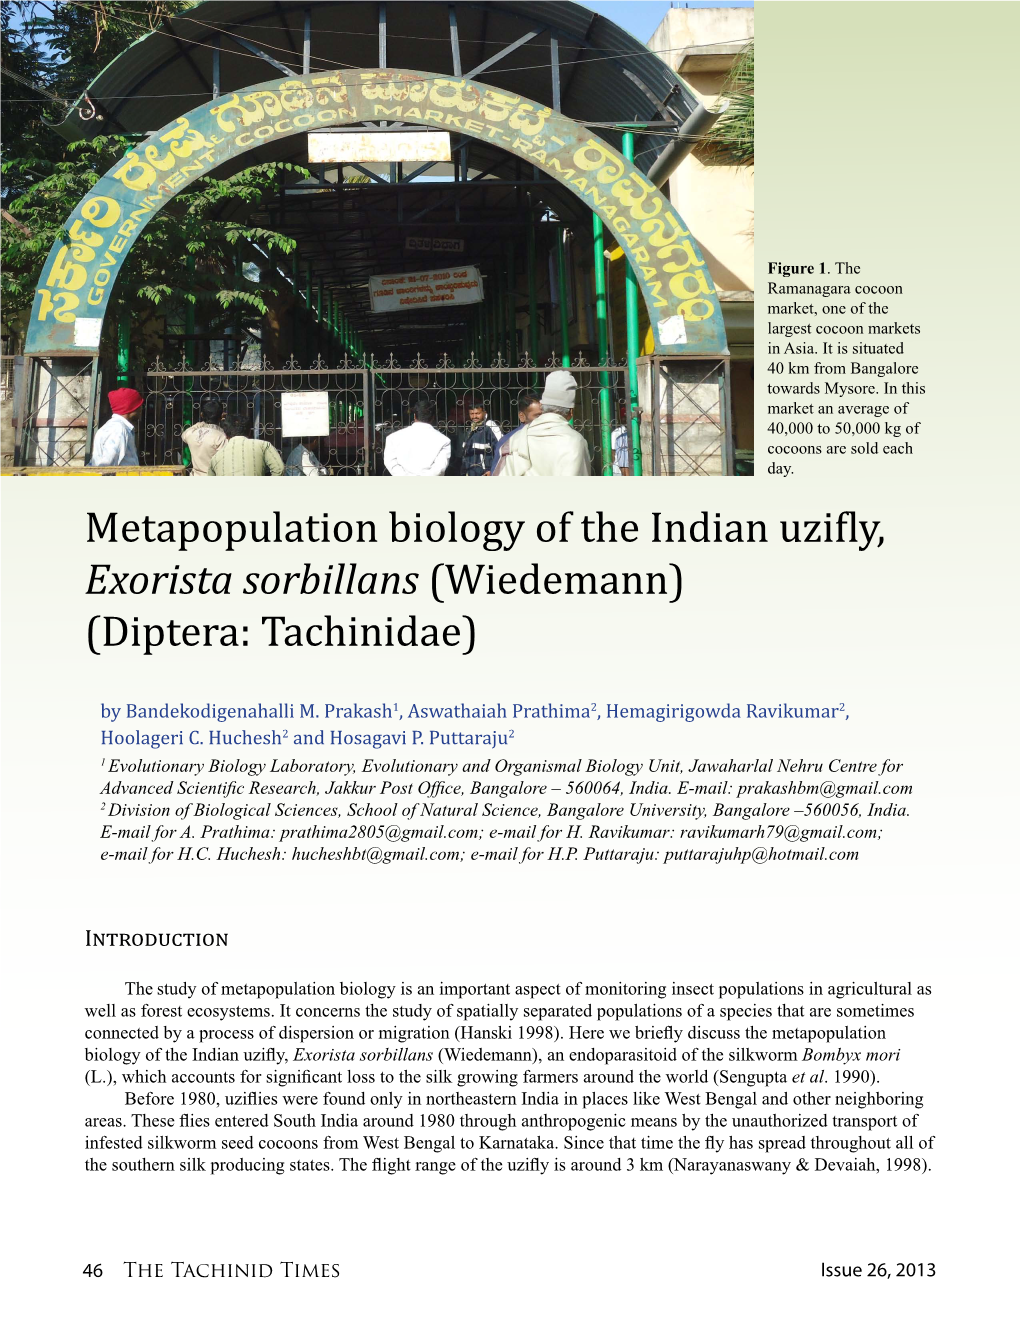 Metapopulation Biology of the Indian Uzifly, Exorista Sorbillans (Wiedemann) (Diptera: Tachinidae)